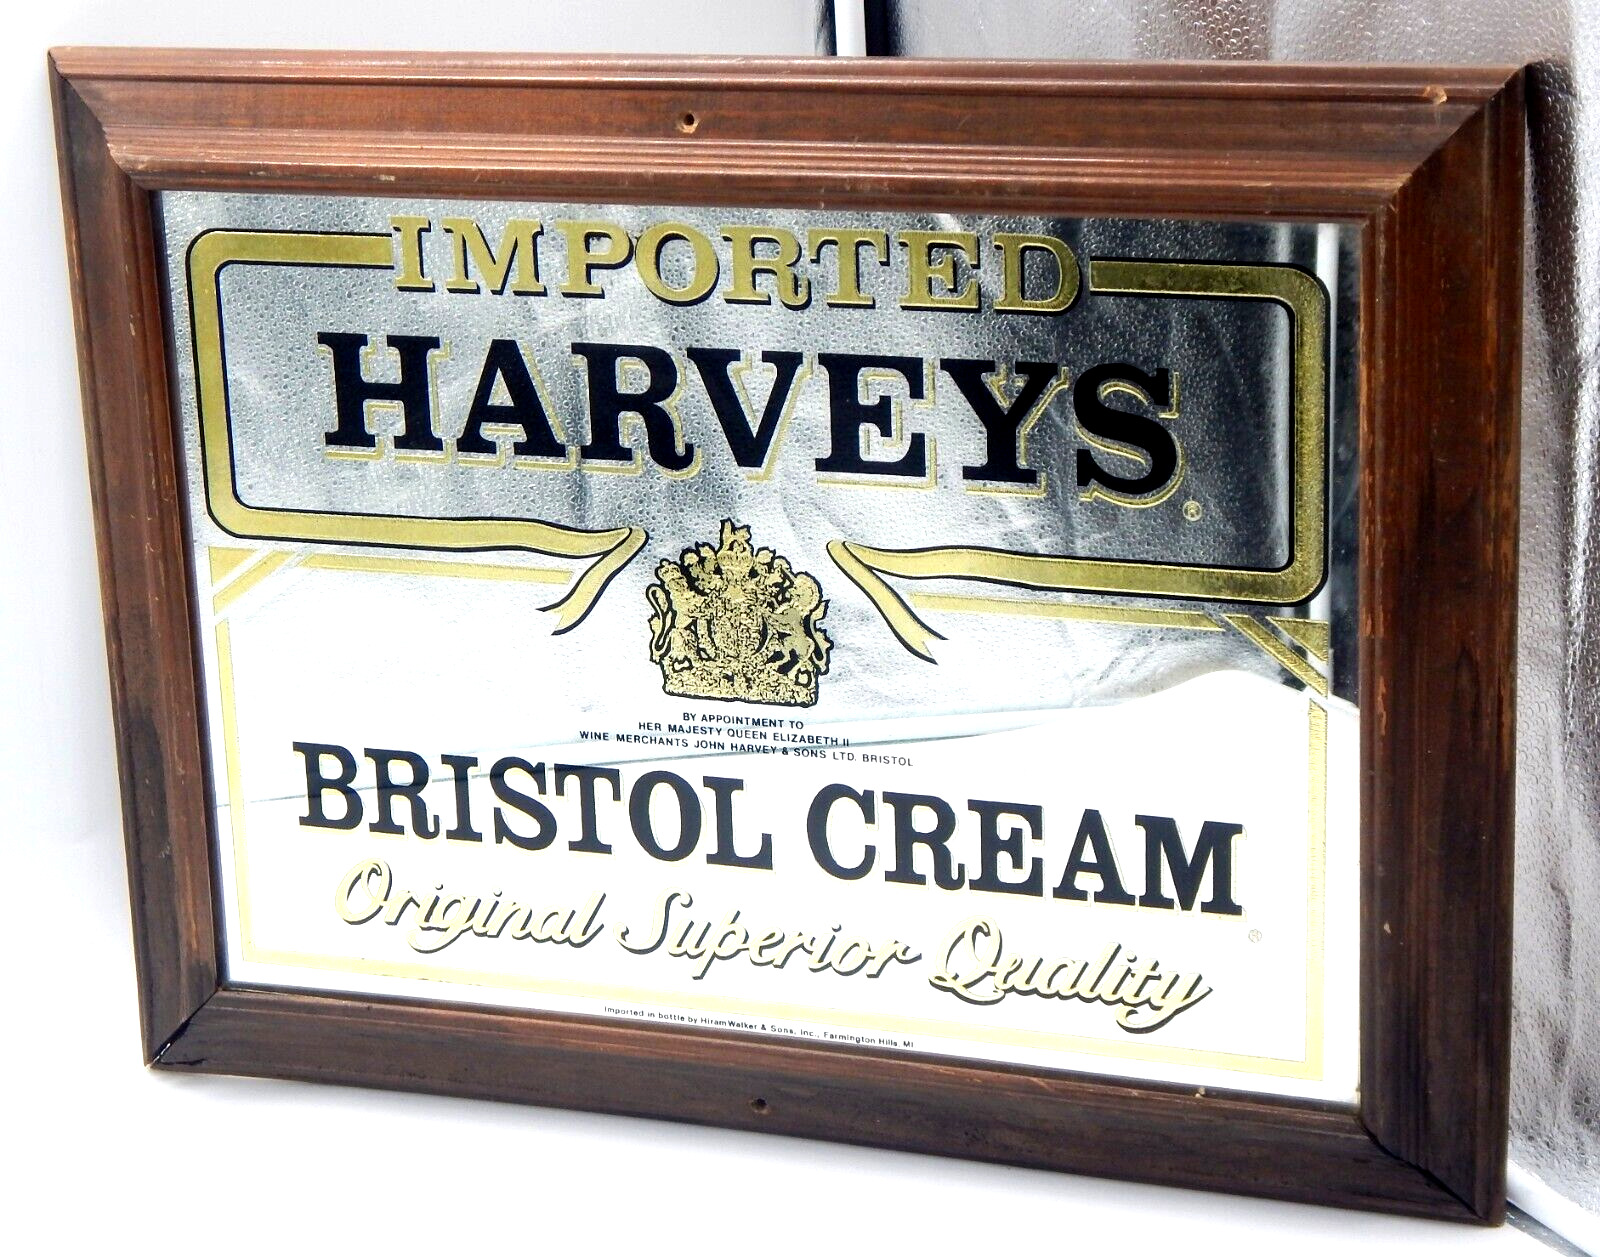 Harvey's Bristol Cream Vintage Mirrored Wood Frame 16.5 H x 21.5 Bar Sign Beeco